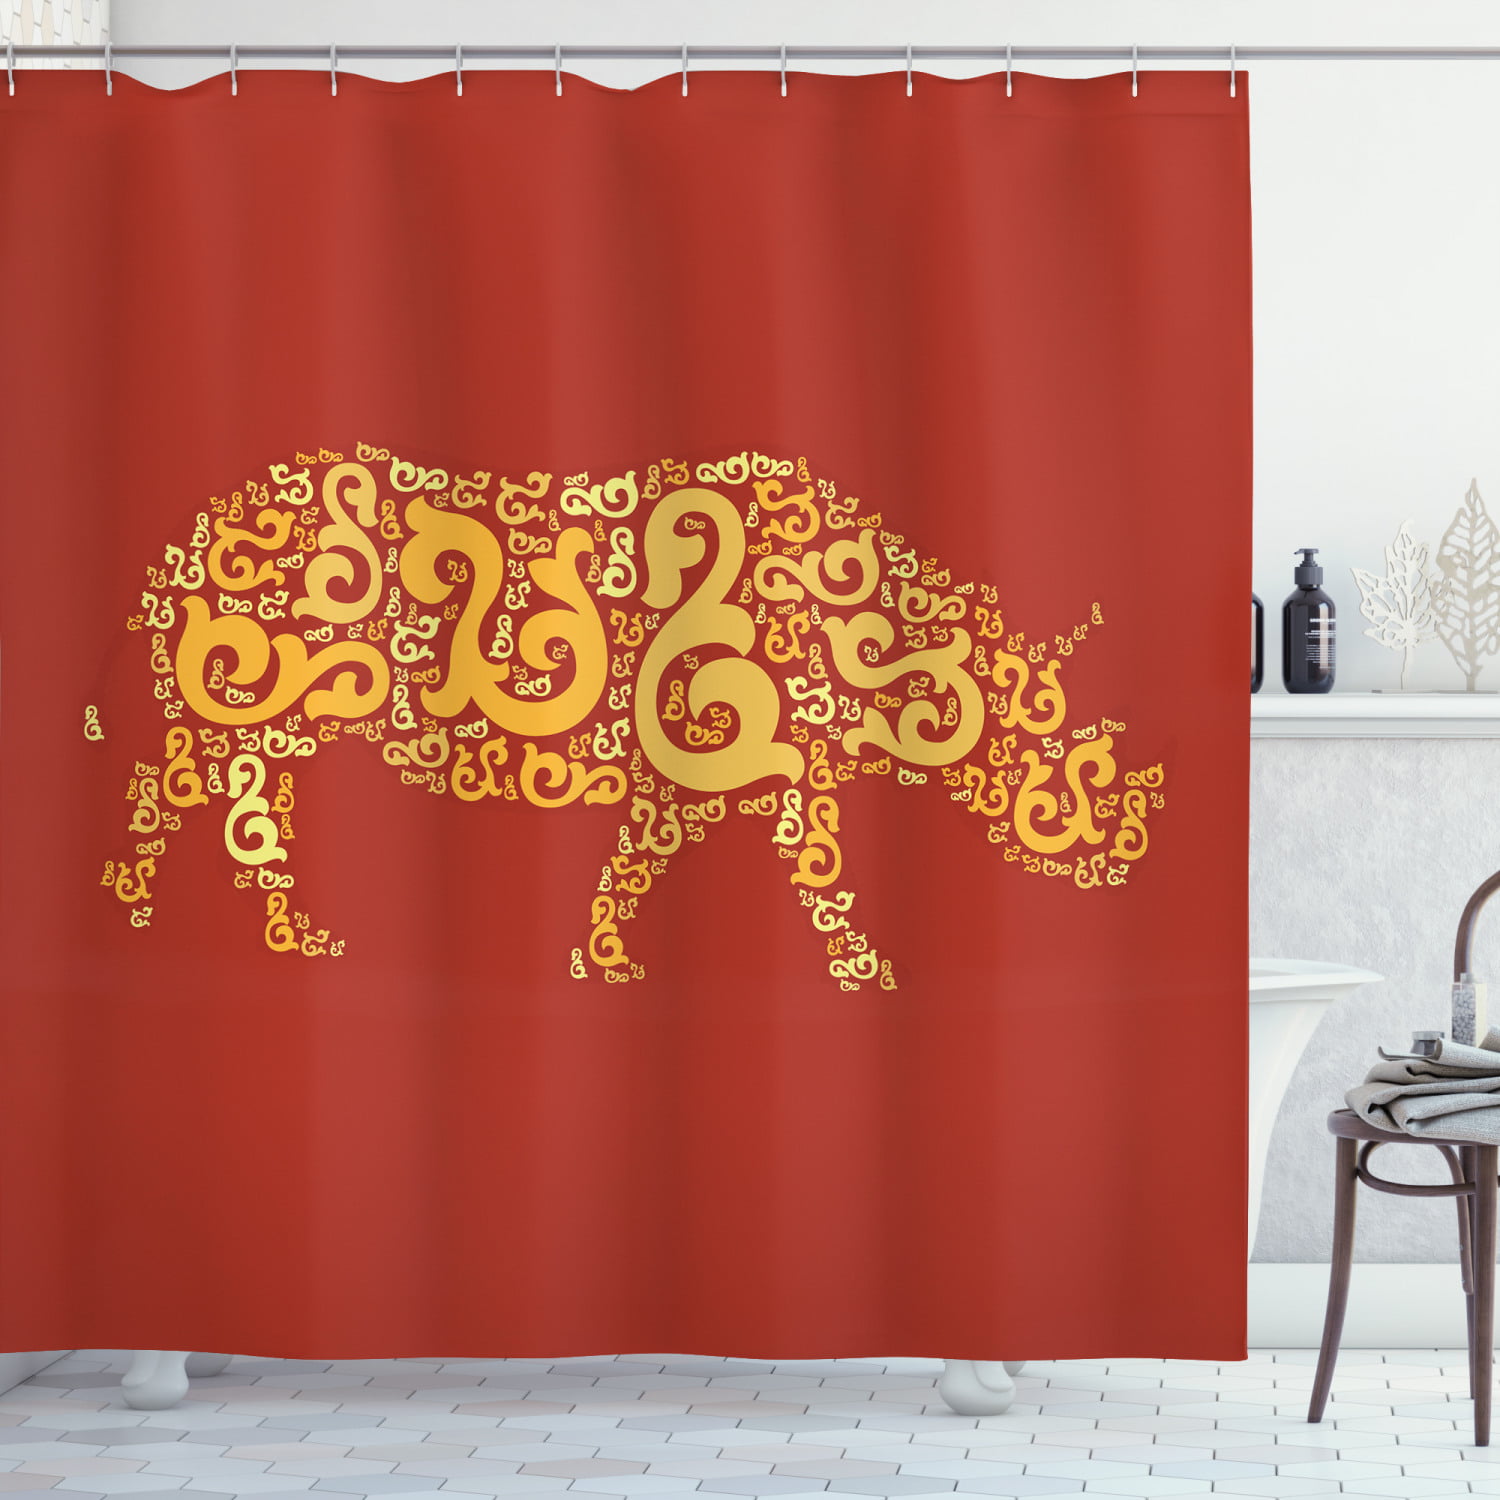 The Rhino Theme Waterproof Fabric Home Decor Shower Curtain Bathroom Mat 